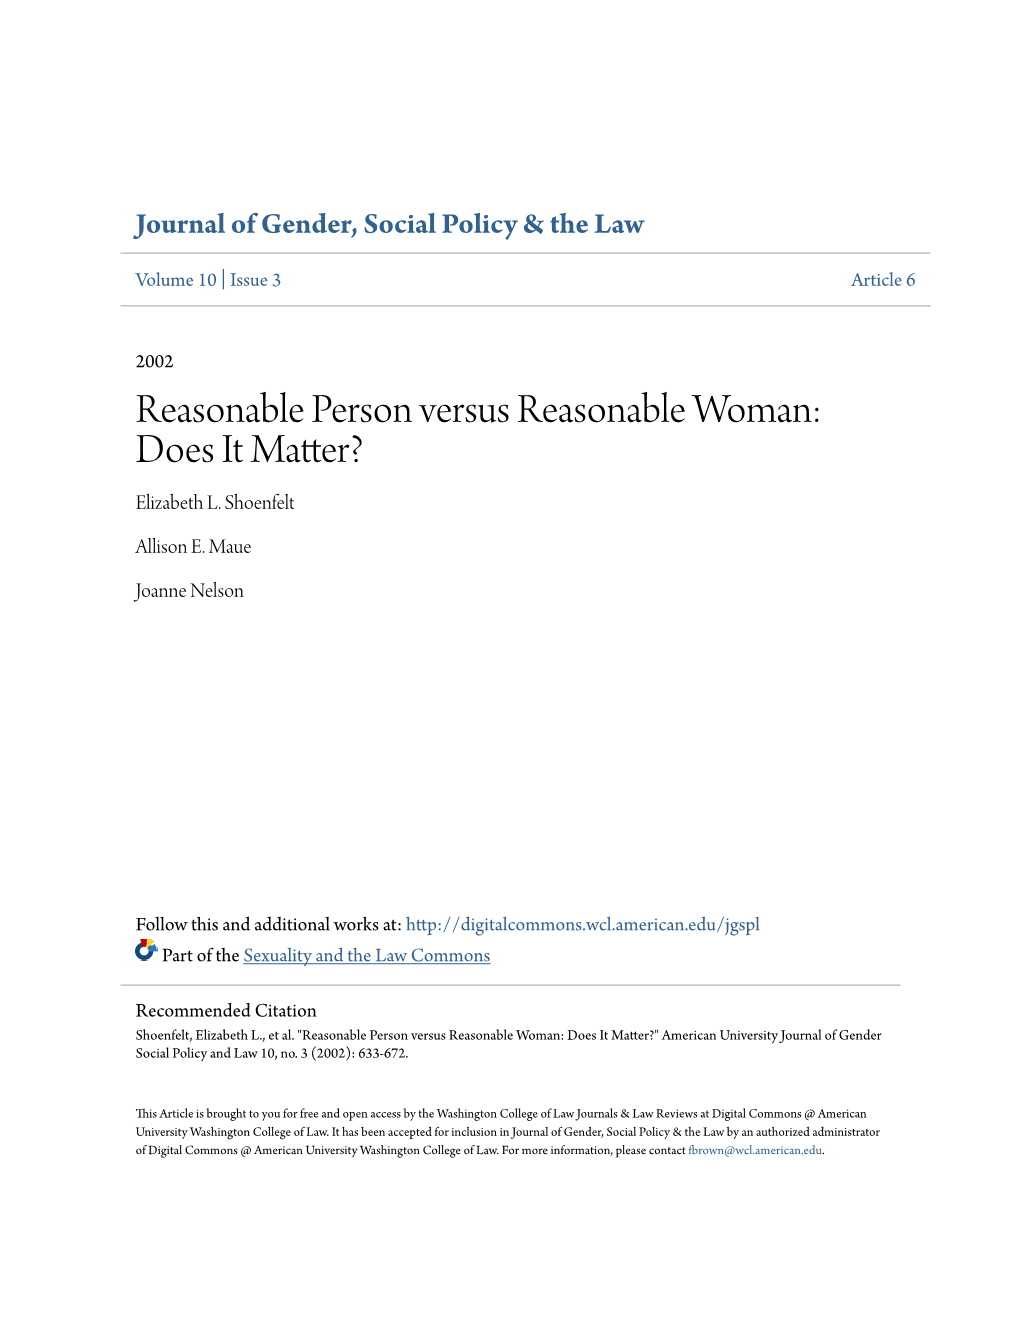 Reasonable Person Versus Reasonable Woman: Does It Matter? Elizabeth L